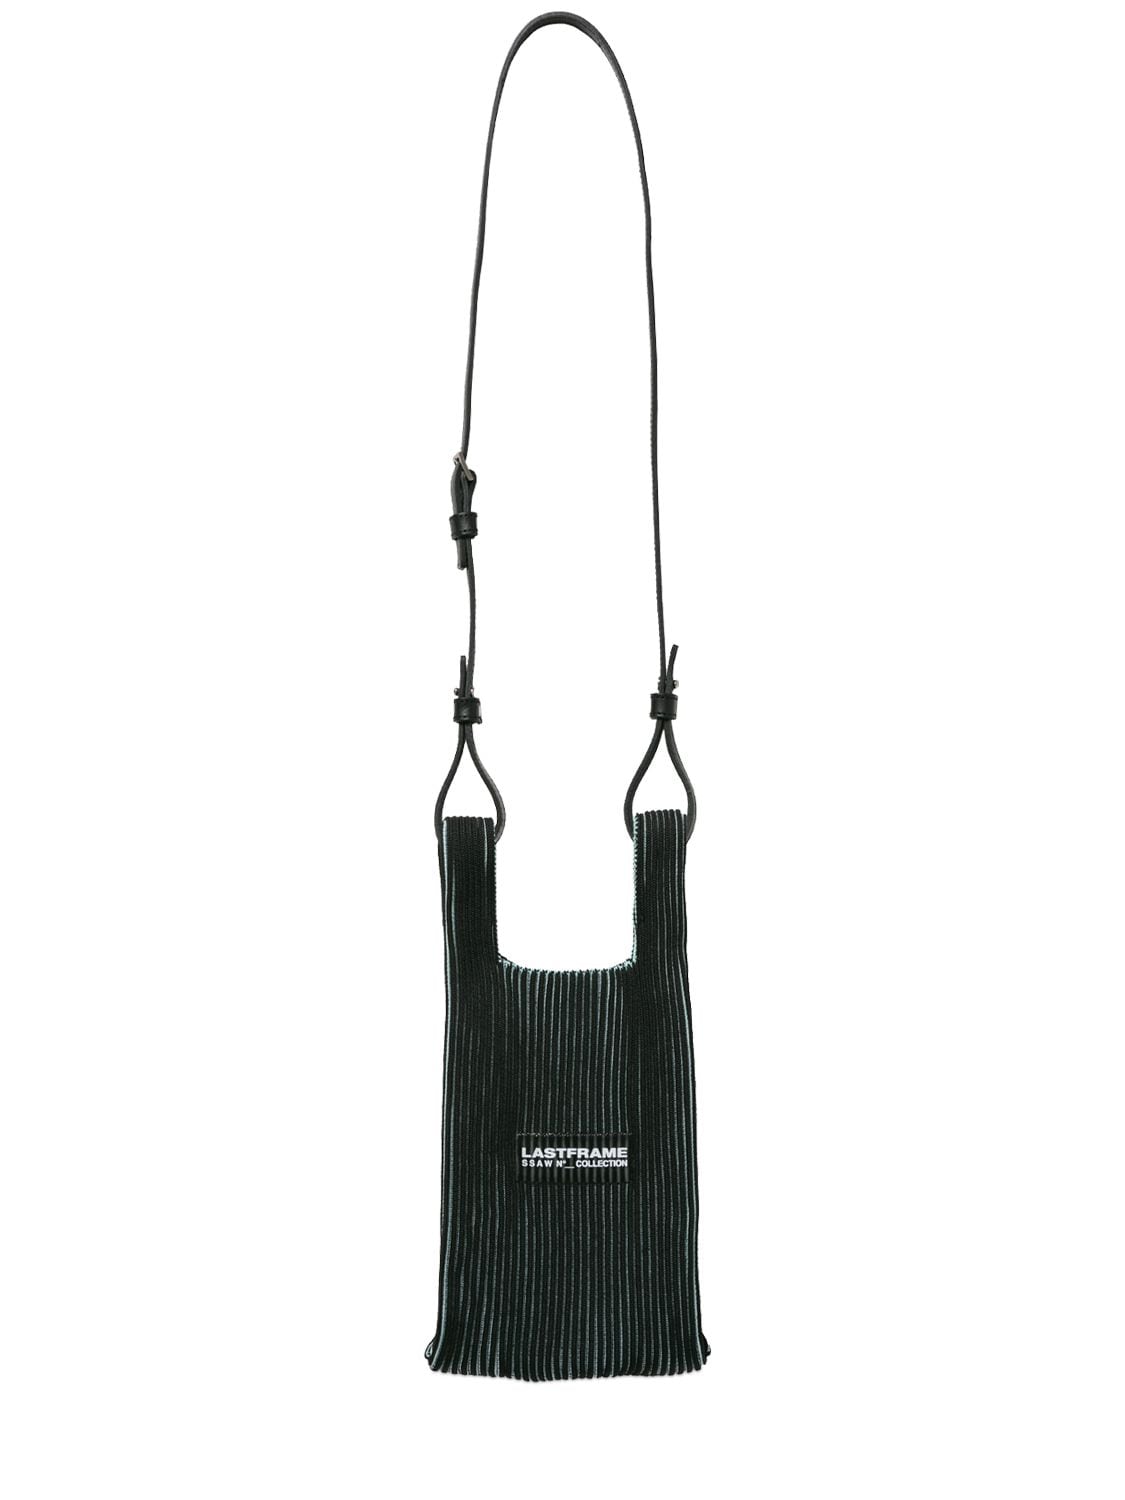 Lastframe Mini Two Tone Market Bag In Black,mint Green | ModeSens